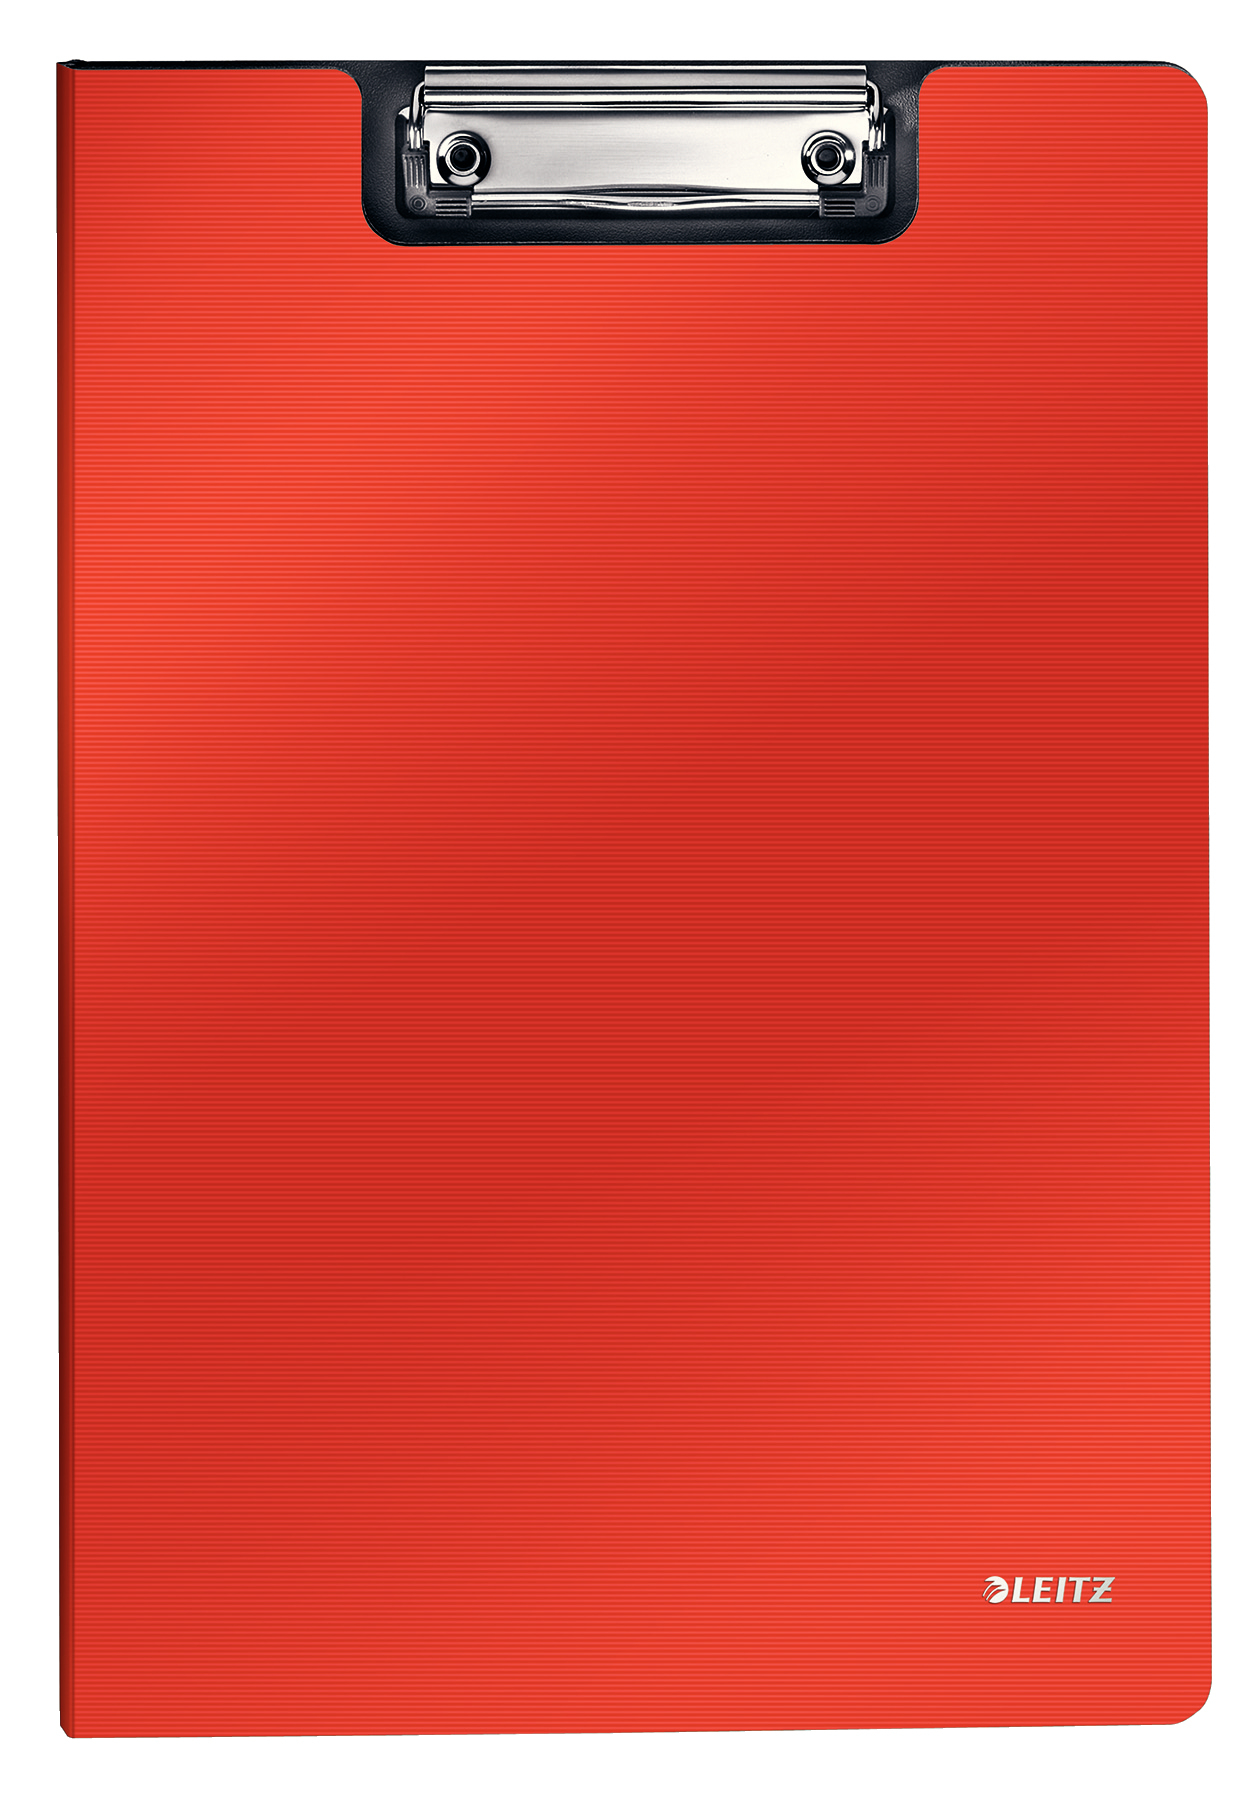 LEITZ Dossier à pince Solid PP A4 39621020 rouge clair